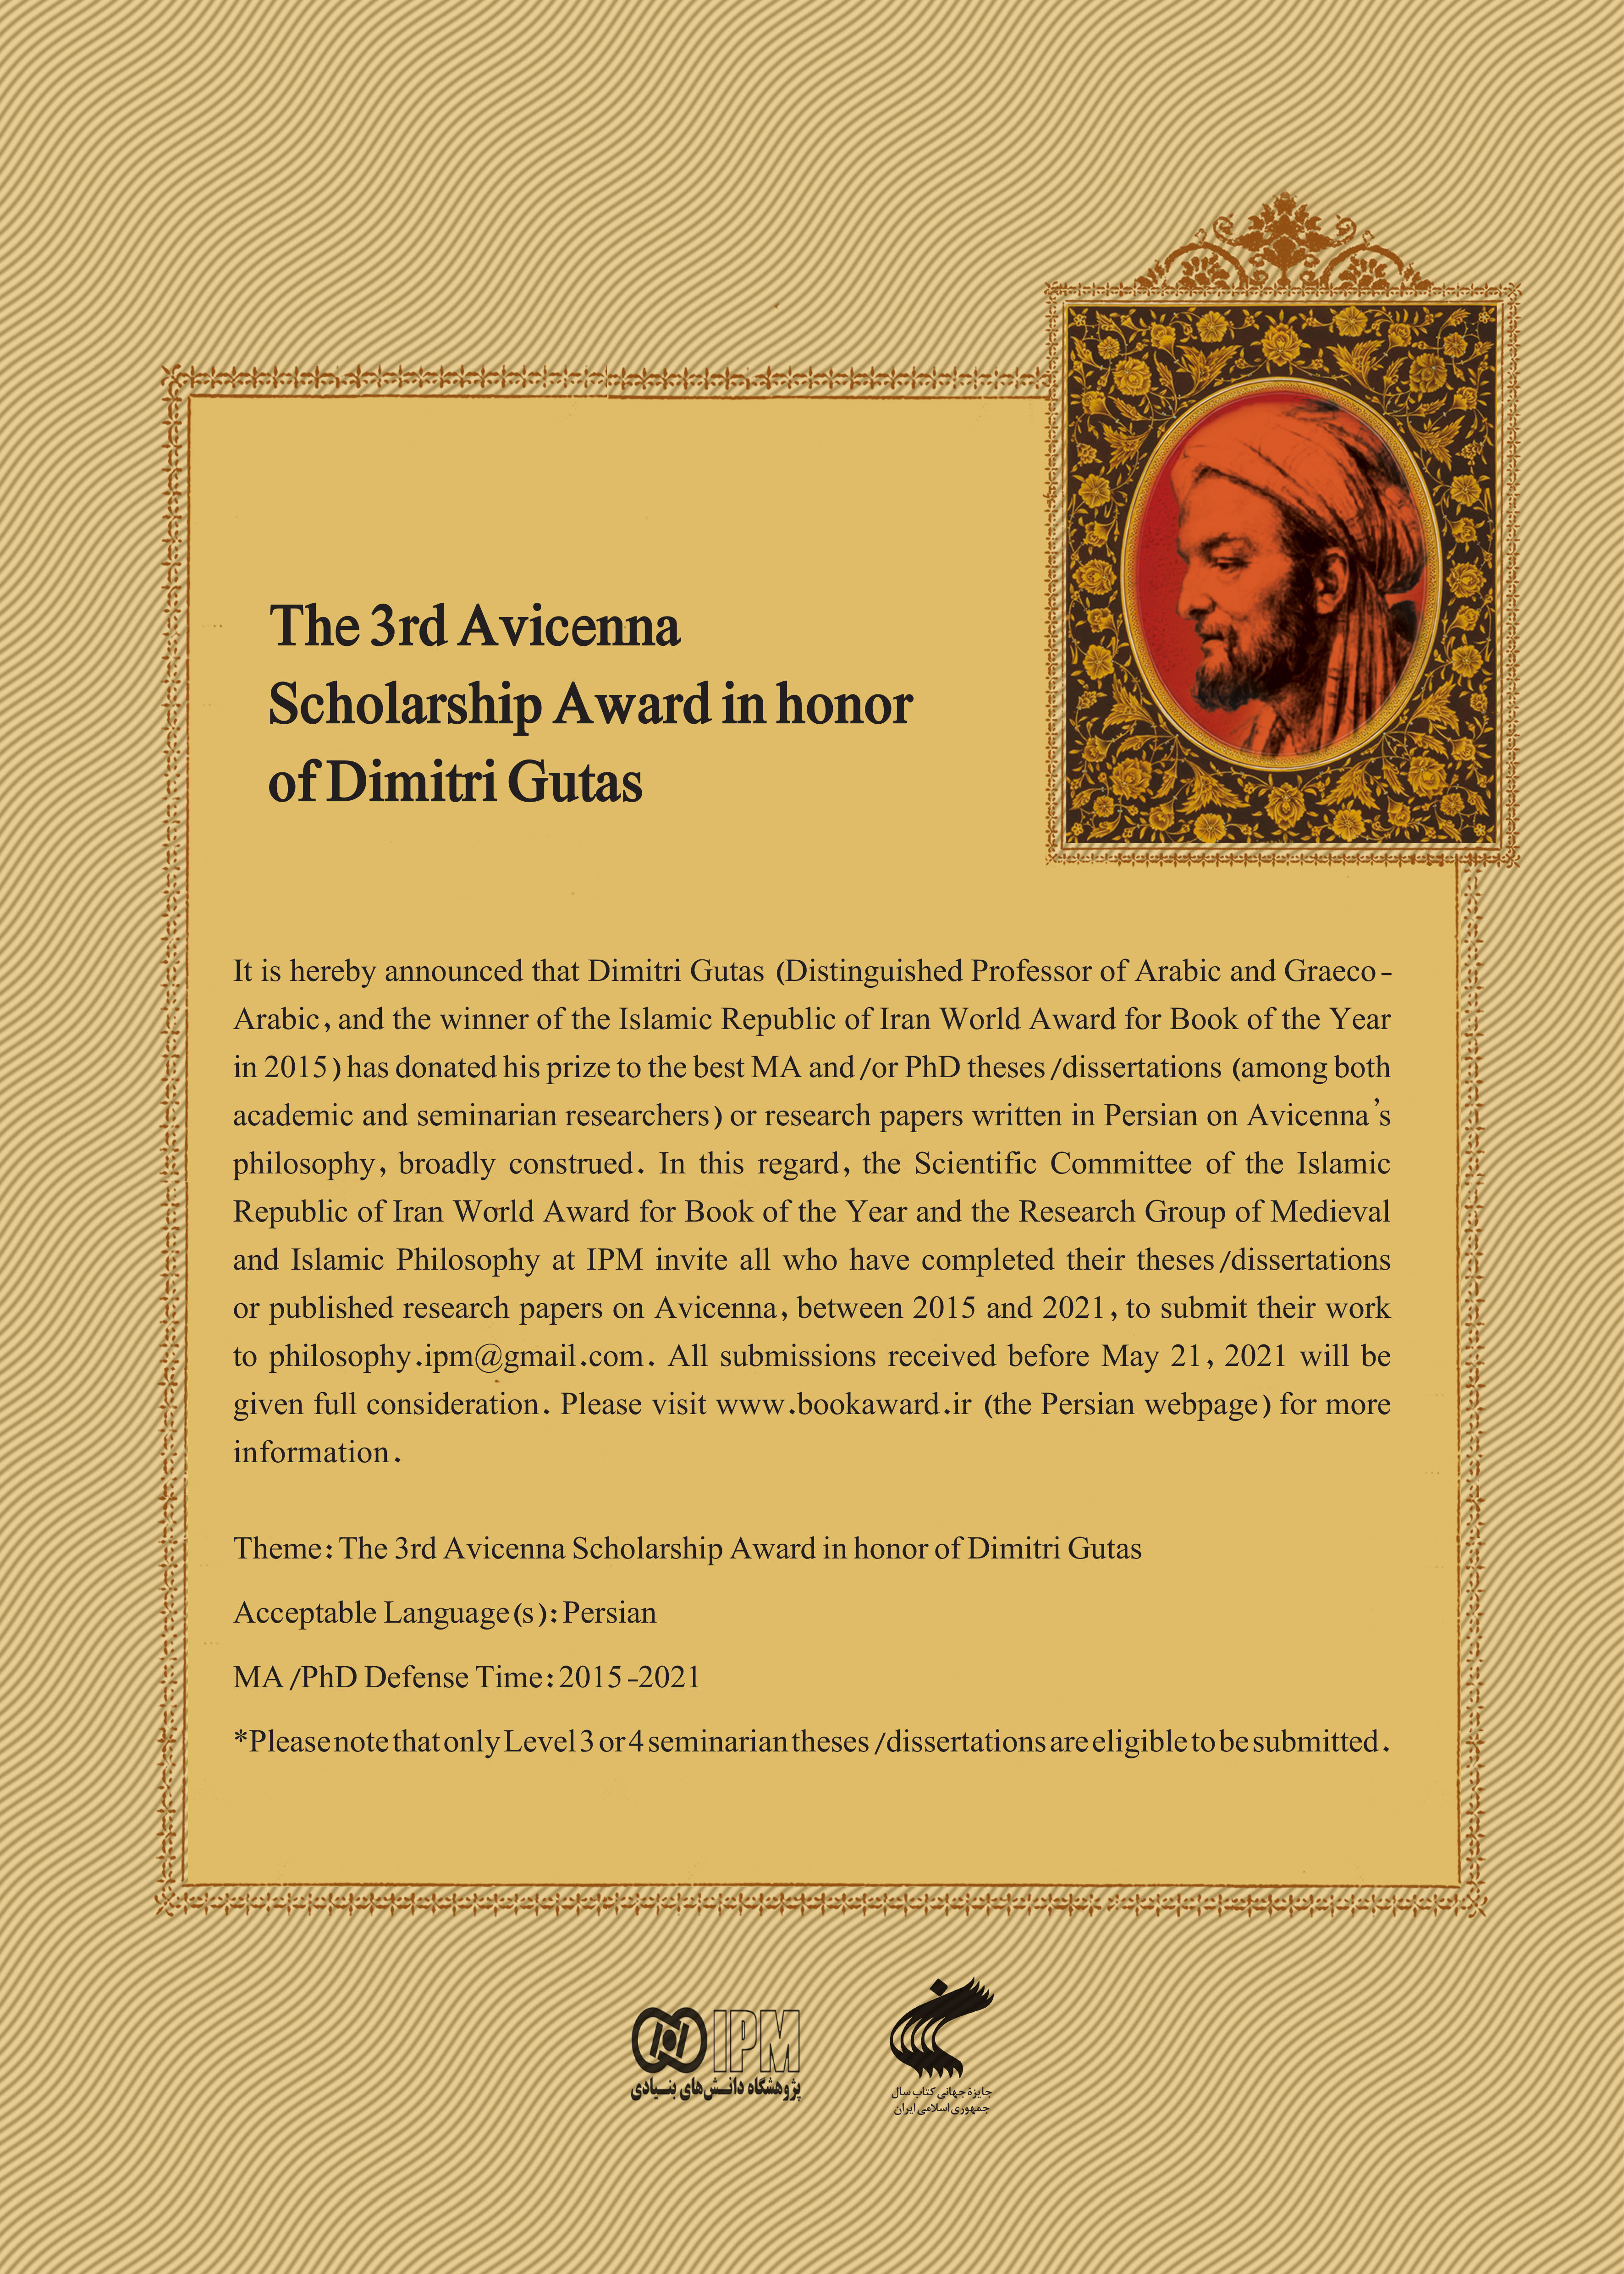 The 3rd Avicenna Scholarship Award in honor of Dimitri Gutas